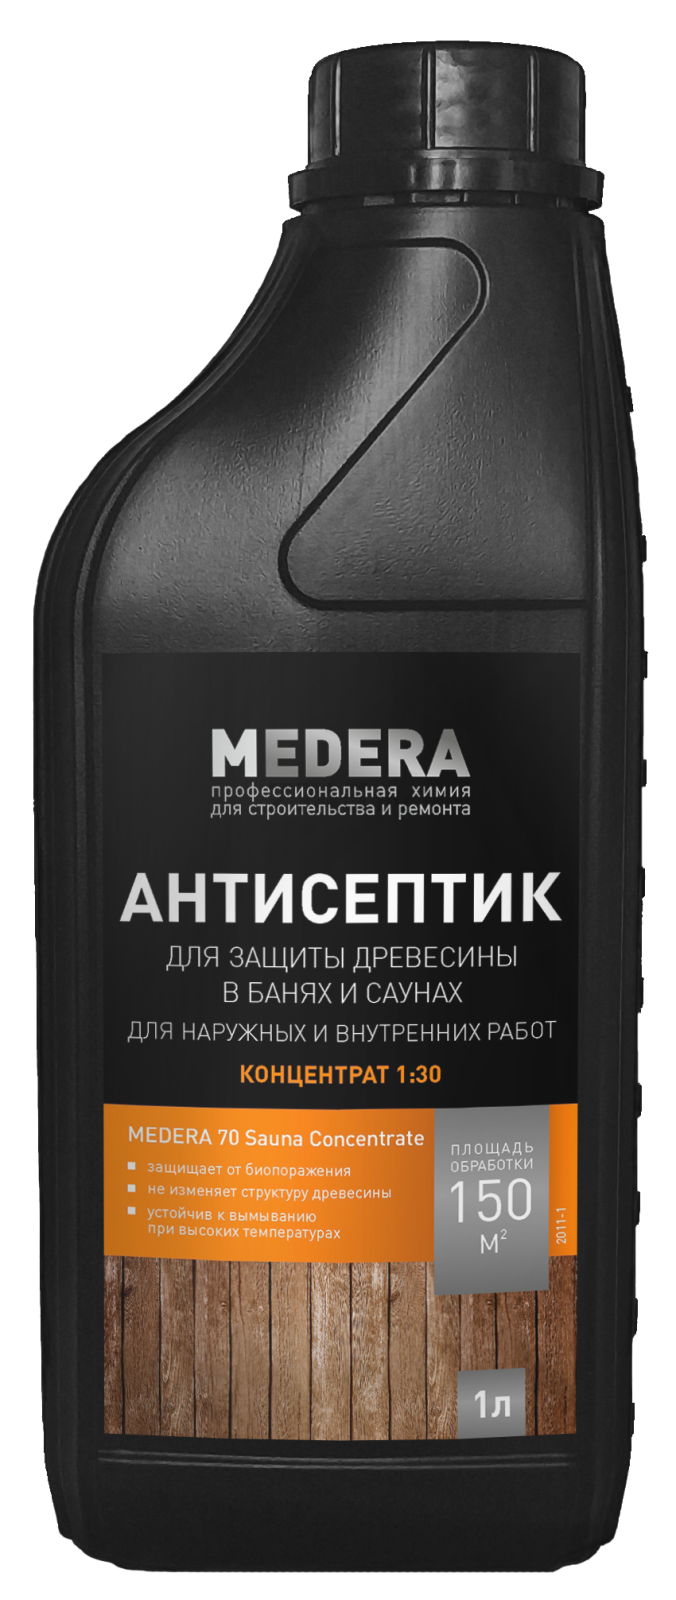 Антисептик MEDERA 70 Sauna концентрат 1/30 1 л (2011-1)